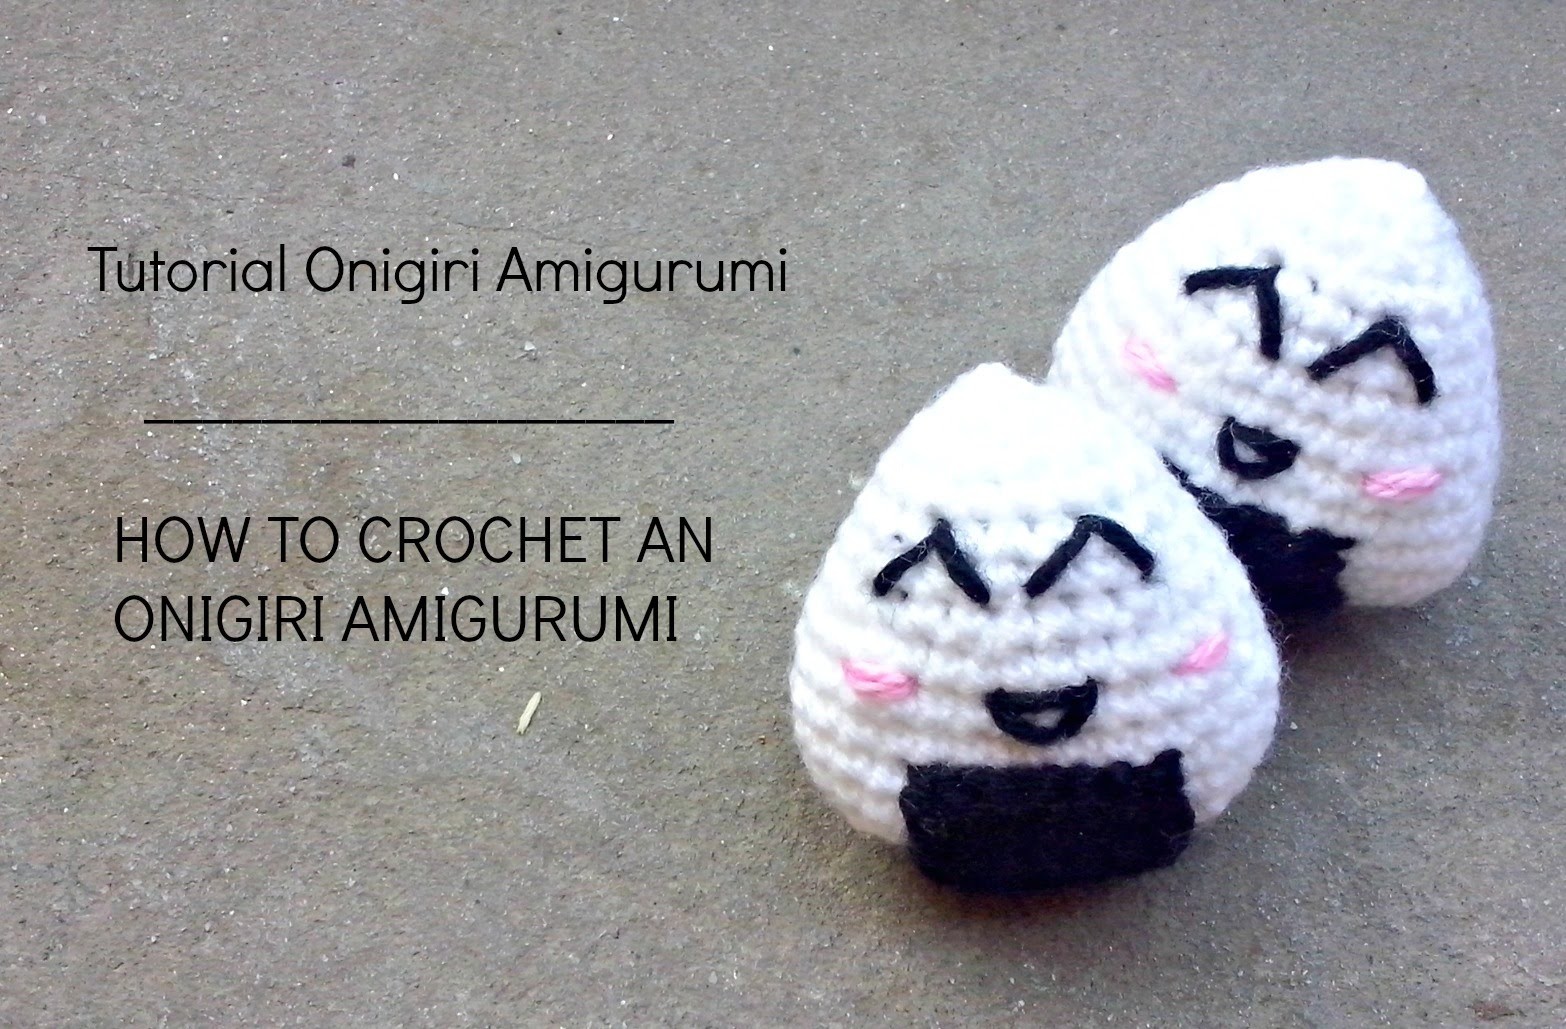 Tutorial Onigiri Amigurumi | HOW TO CROCHET AN ONIGIRI AMIGURUMI